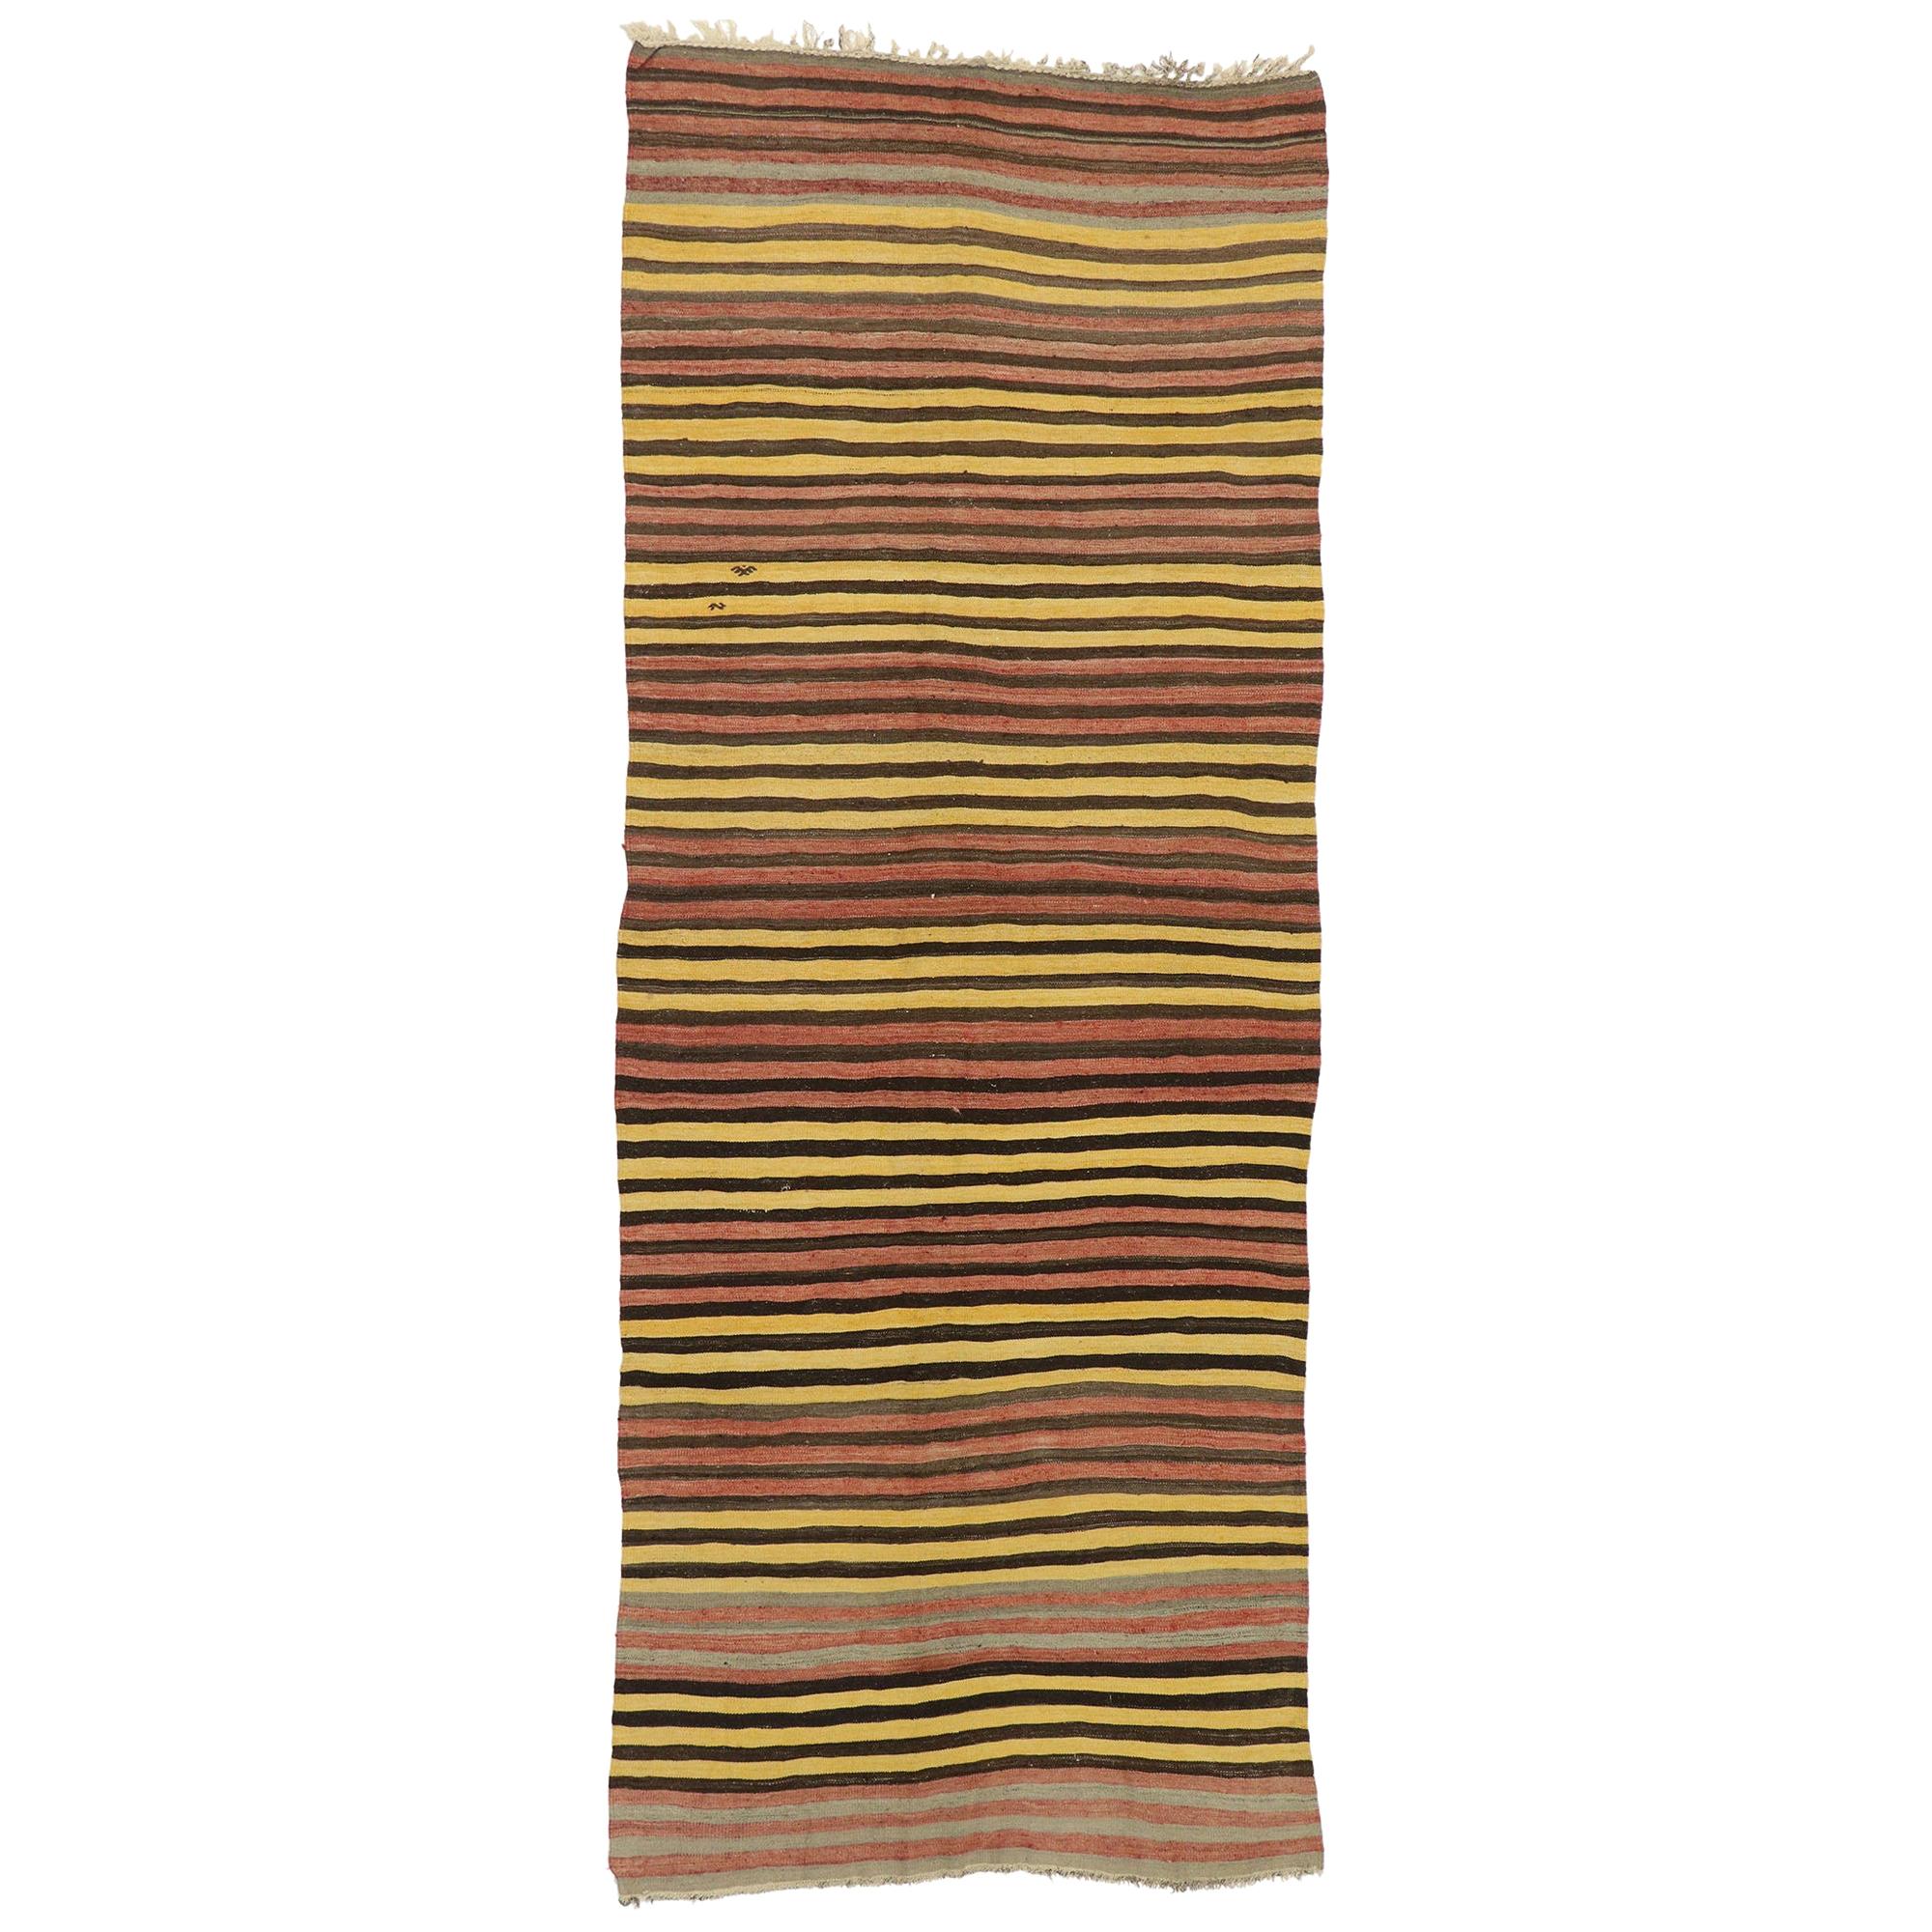 Vintage Turkish Striped Kilim Rug with Mid-Century Modern Style